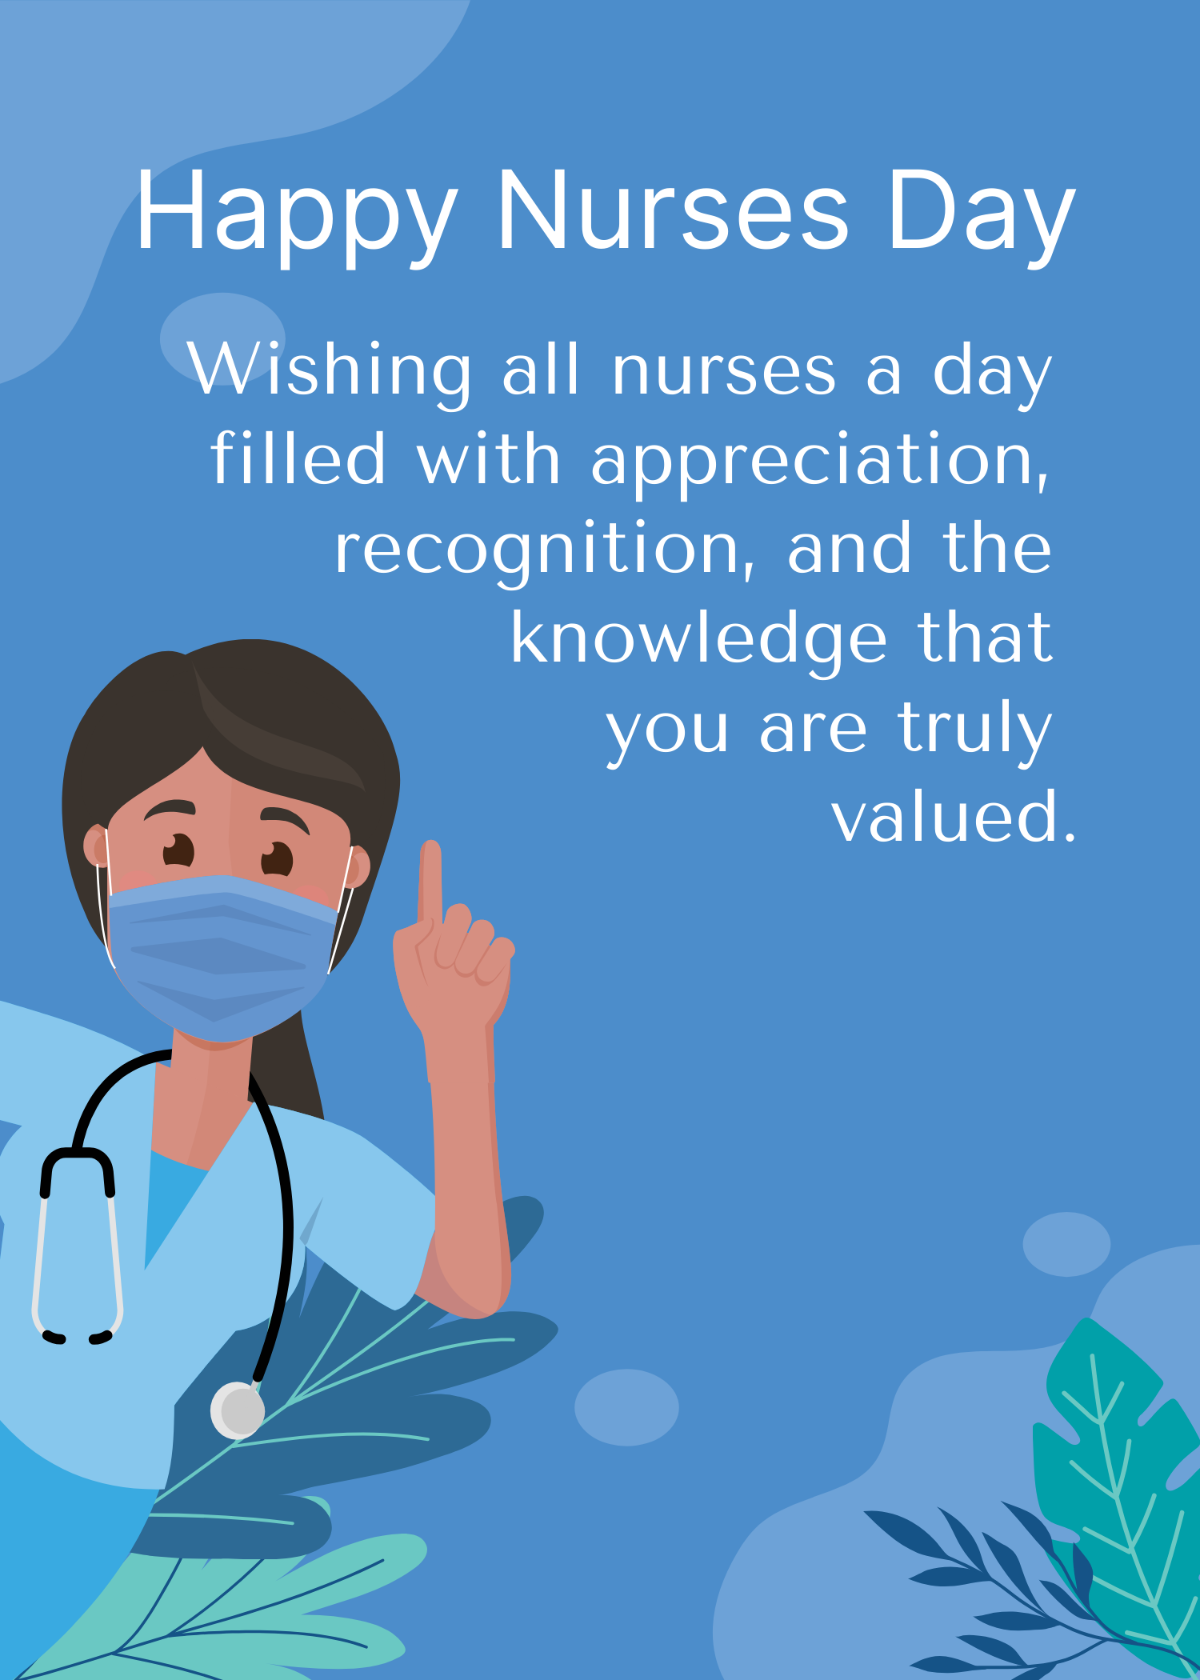 International Nurses Day Greeting Card